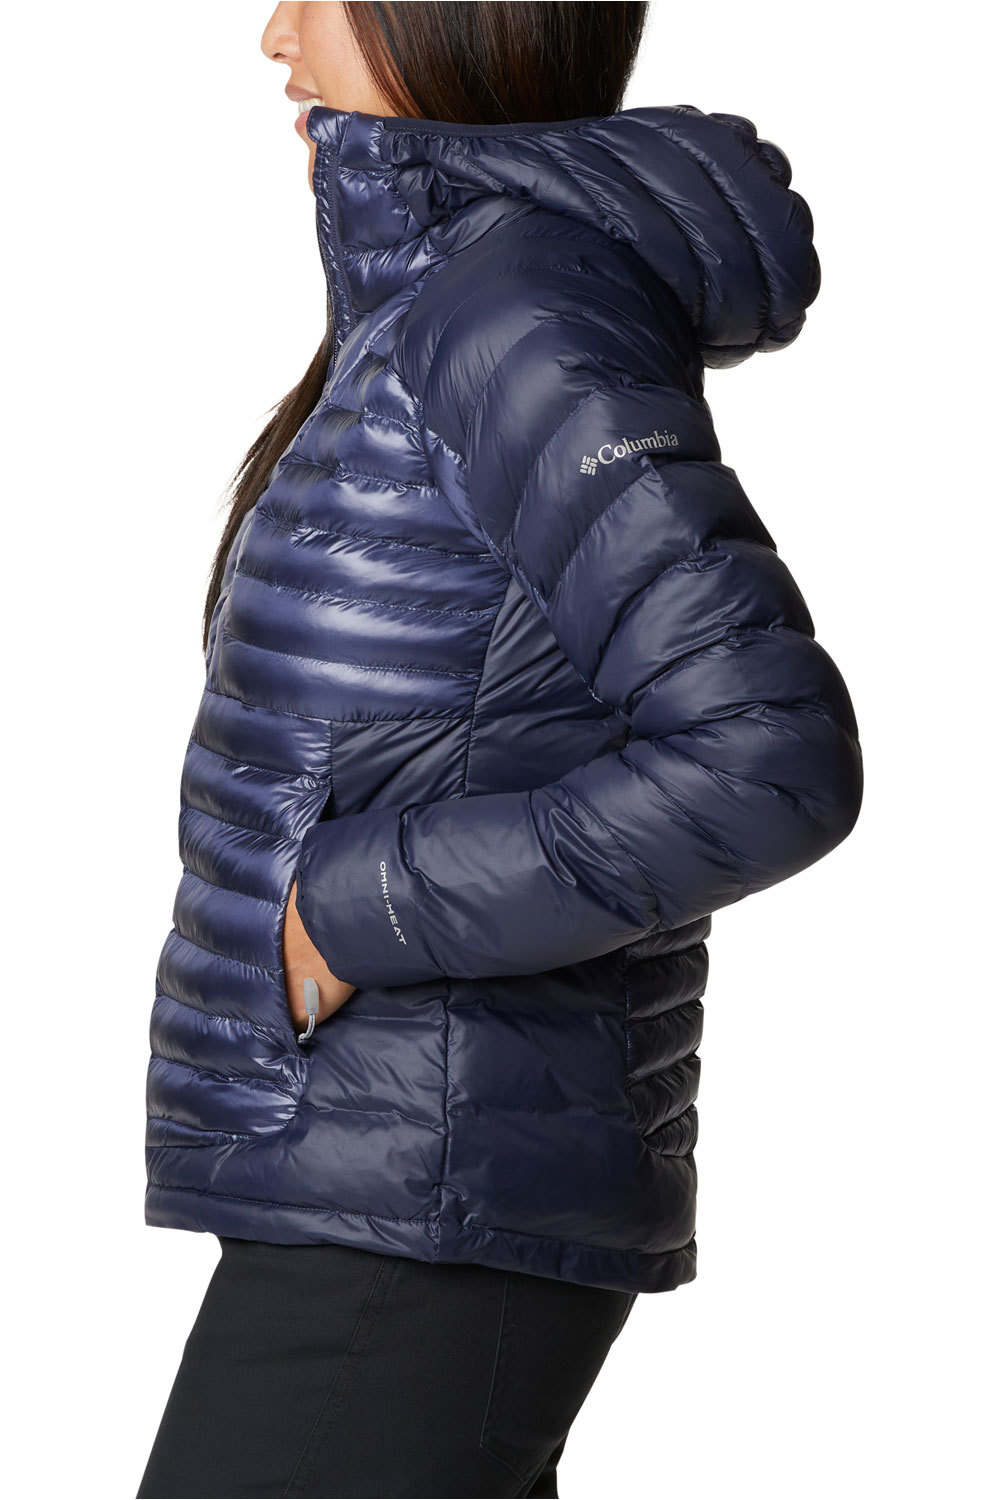 Columbia chaqueta outdoor mujer Labyrinth Loop Hooded Jacket vista frontal